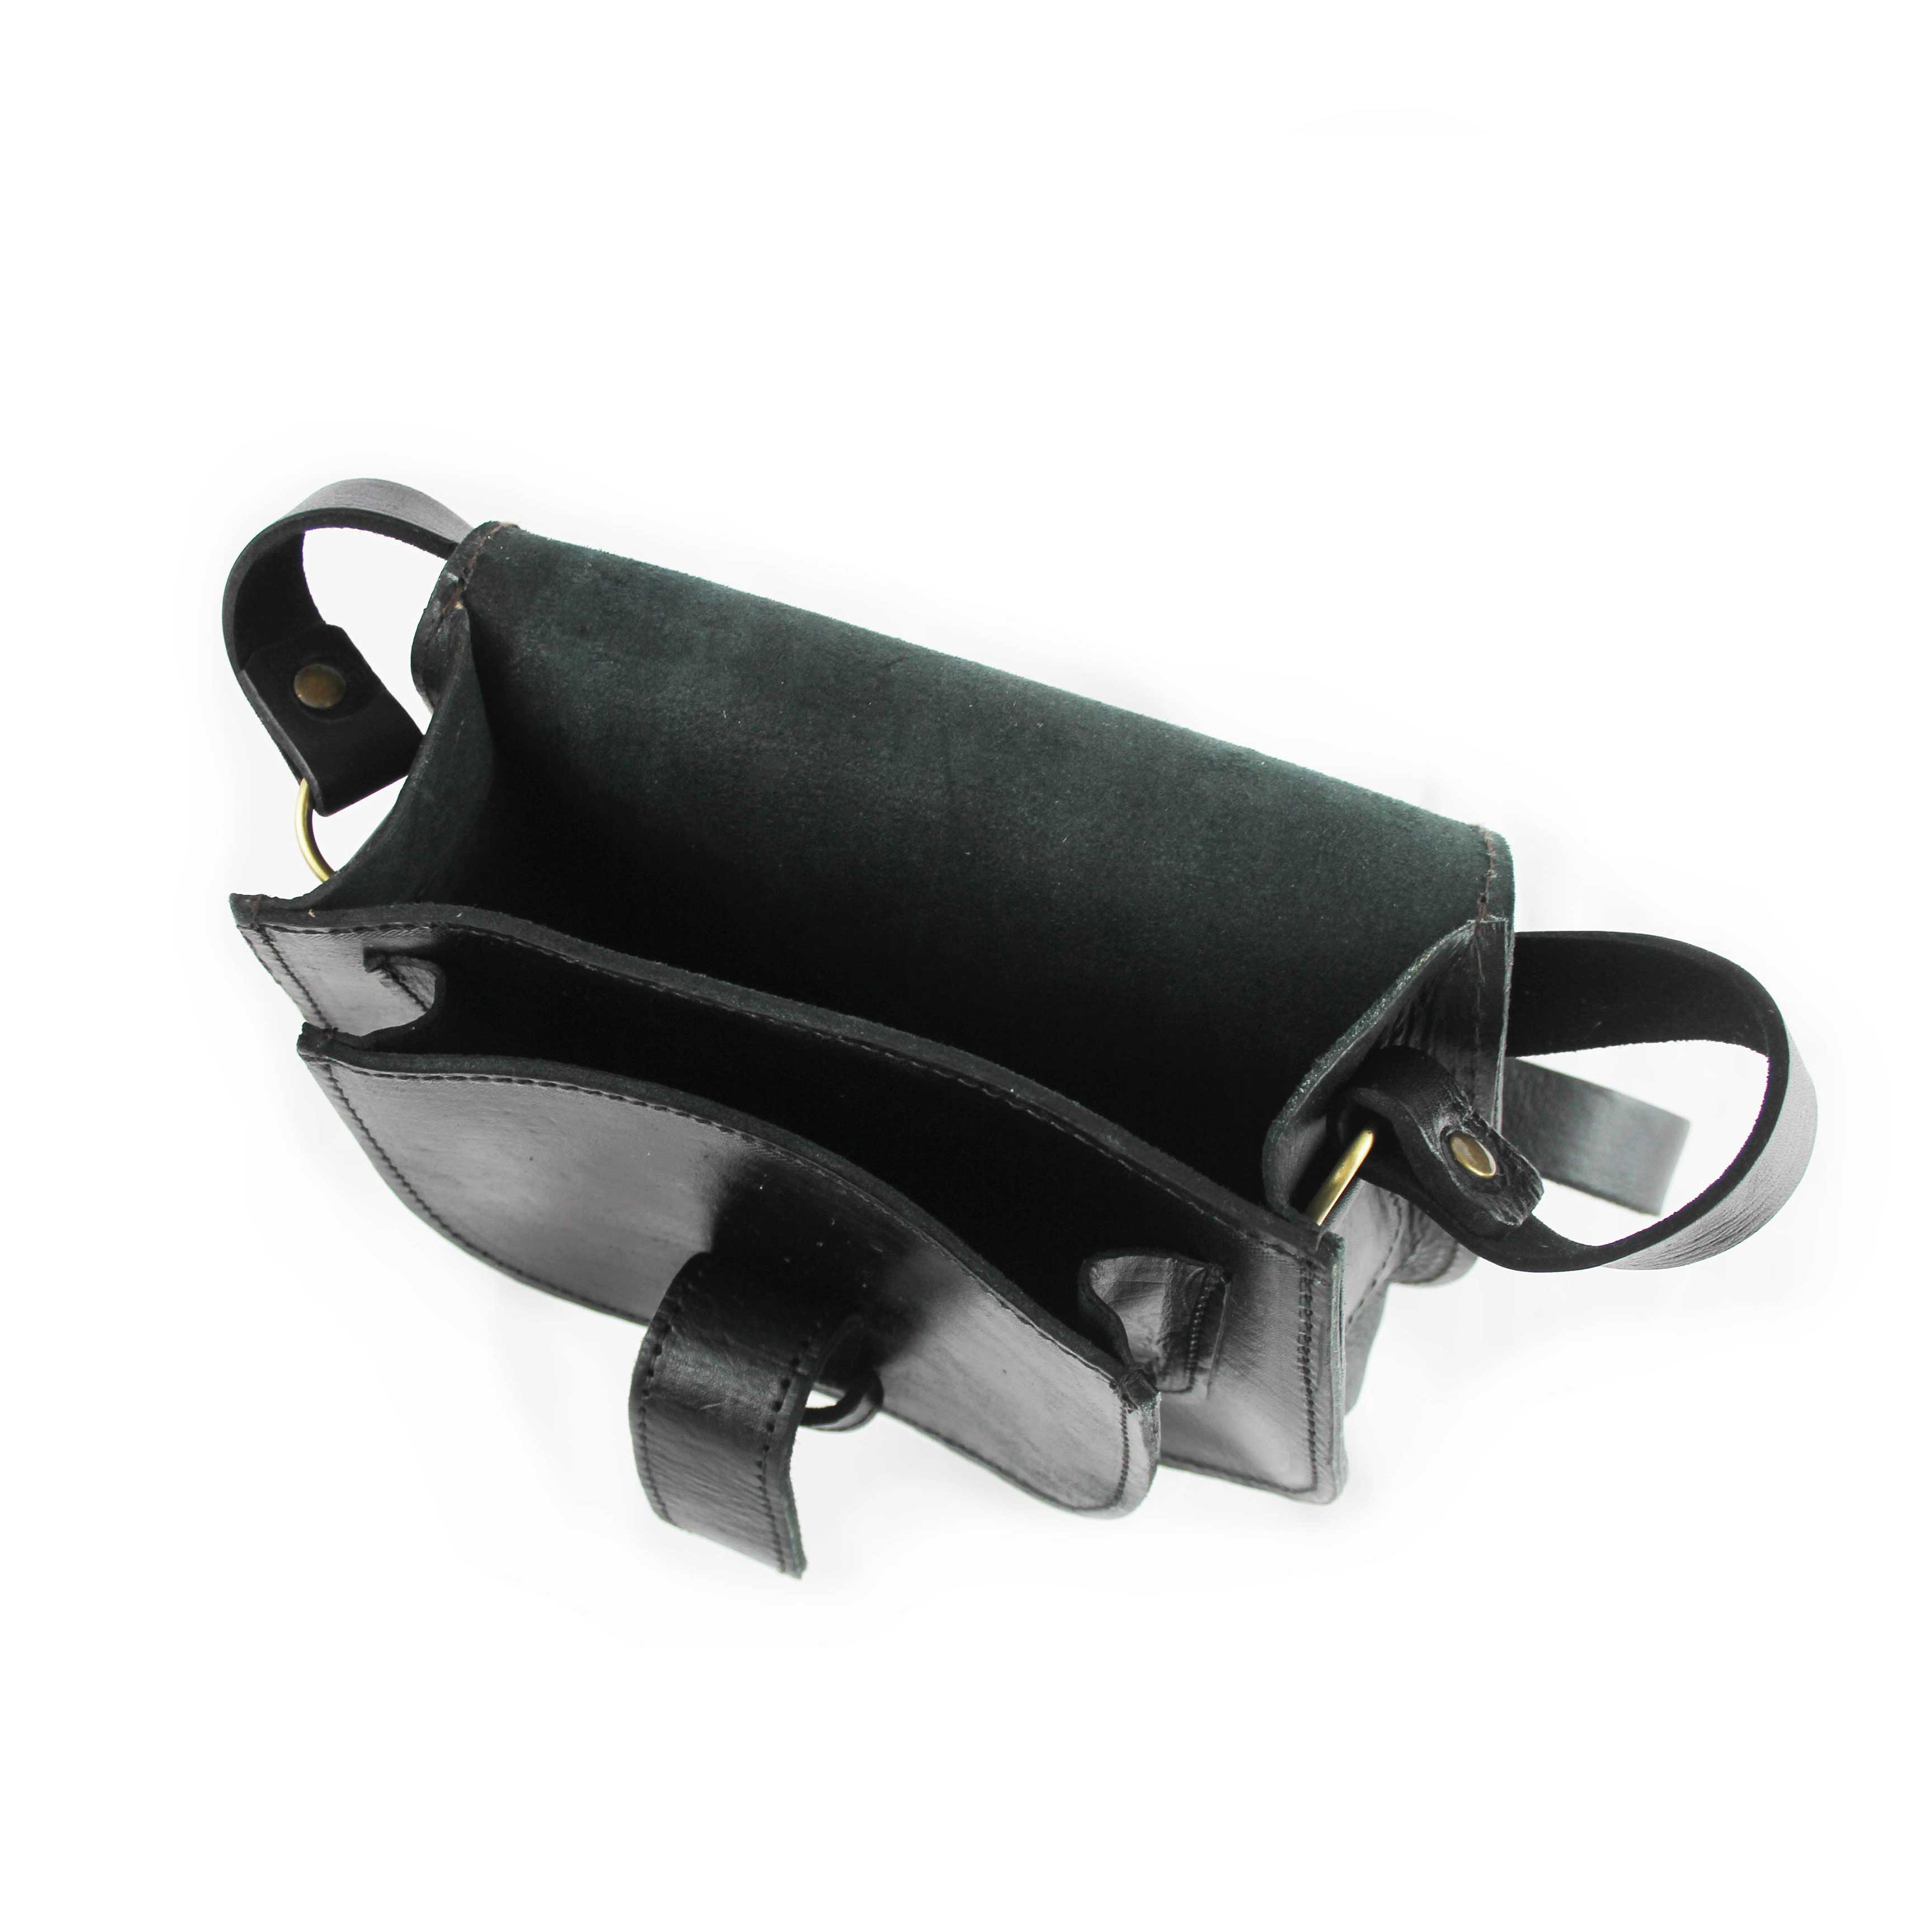 Maya Small Black Leather Saddle Bag